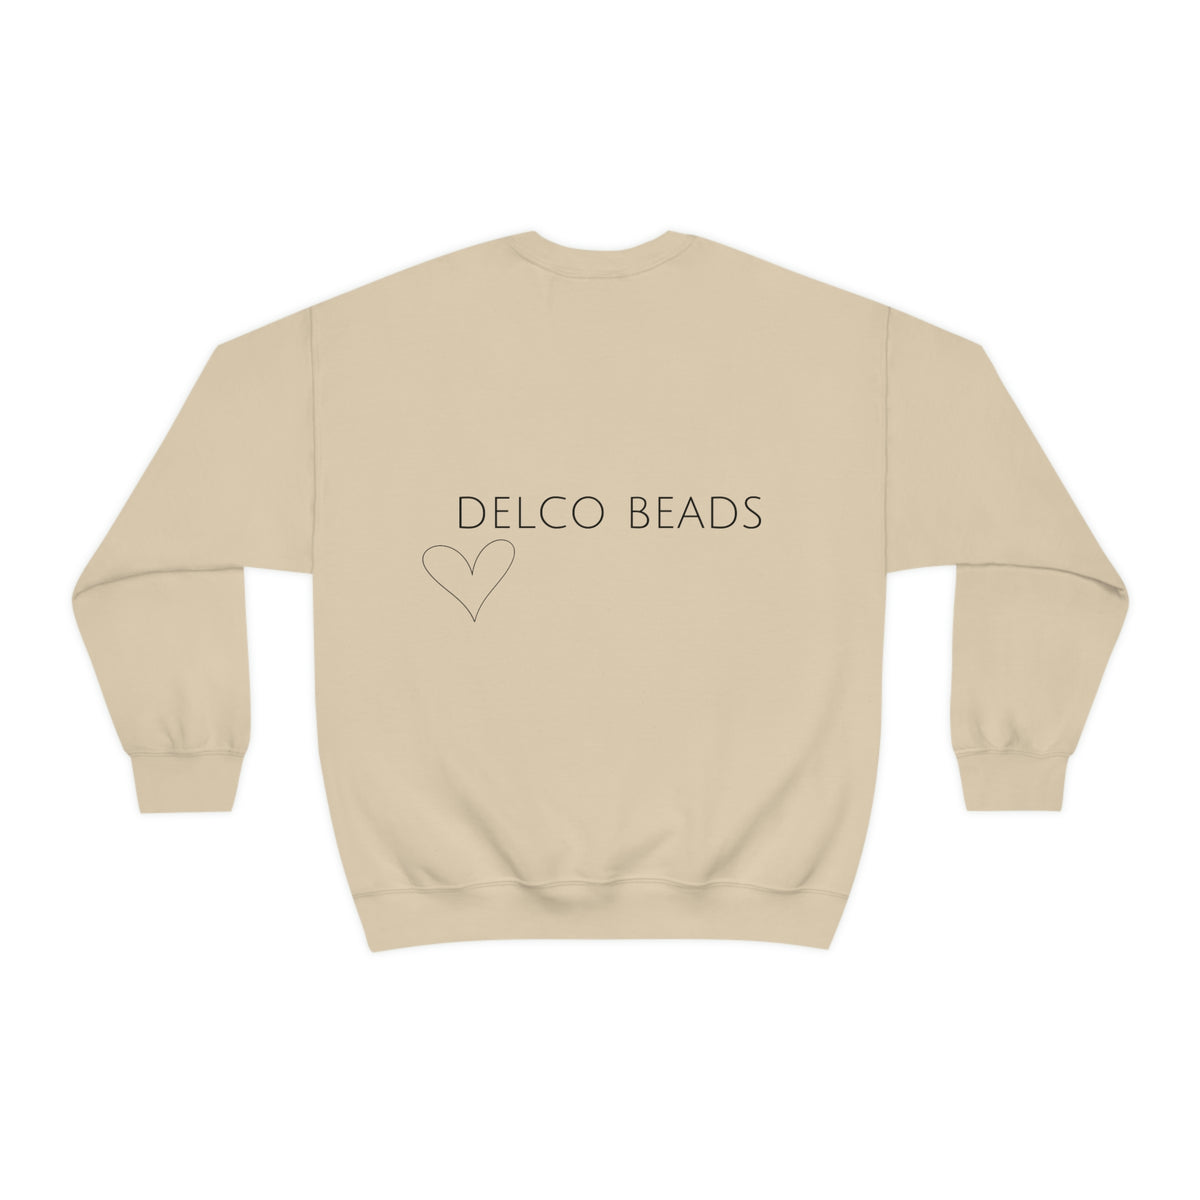 Delco Beads Crewneck, Delaware County Small Business Top, Delco Beads Minimalist Sweatshirt